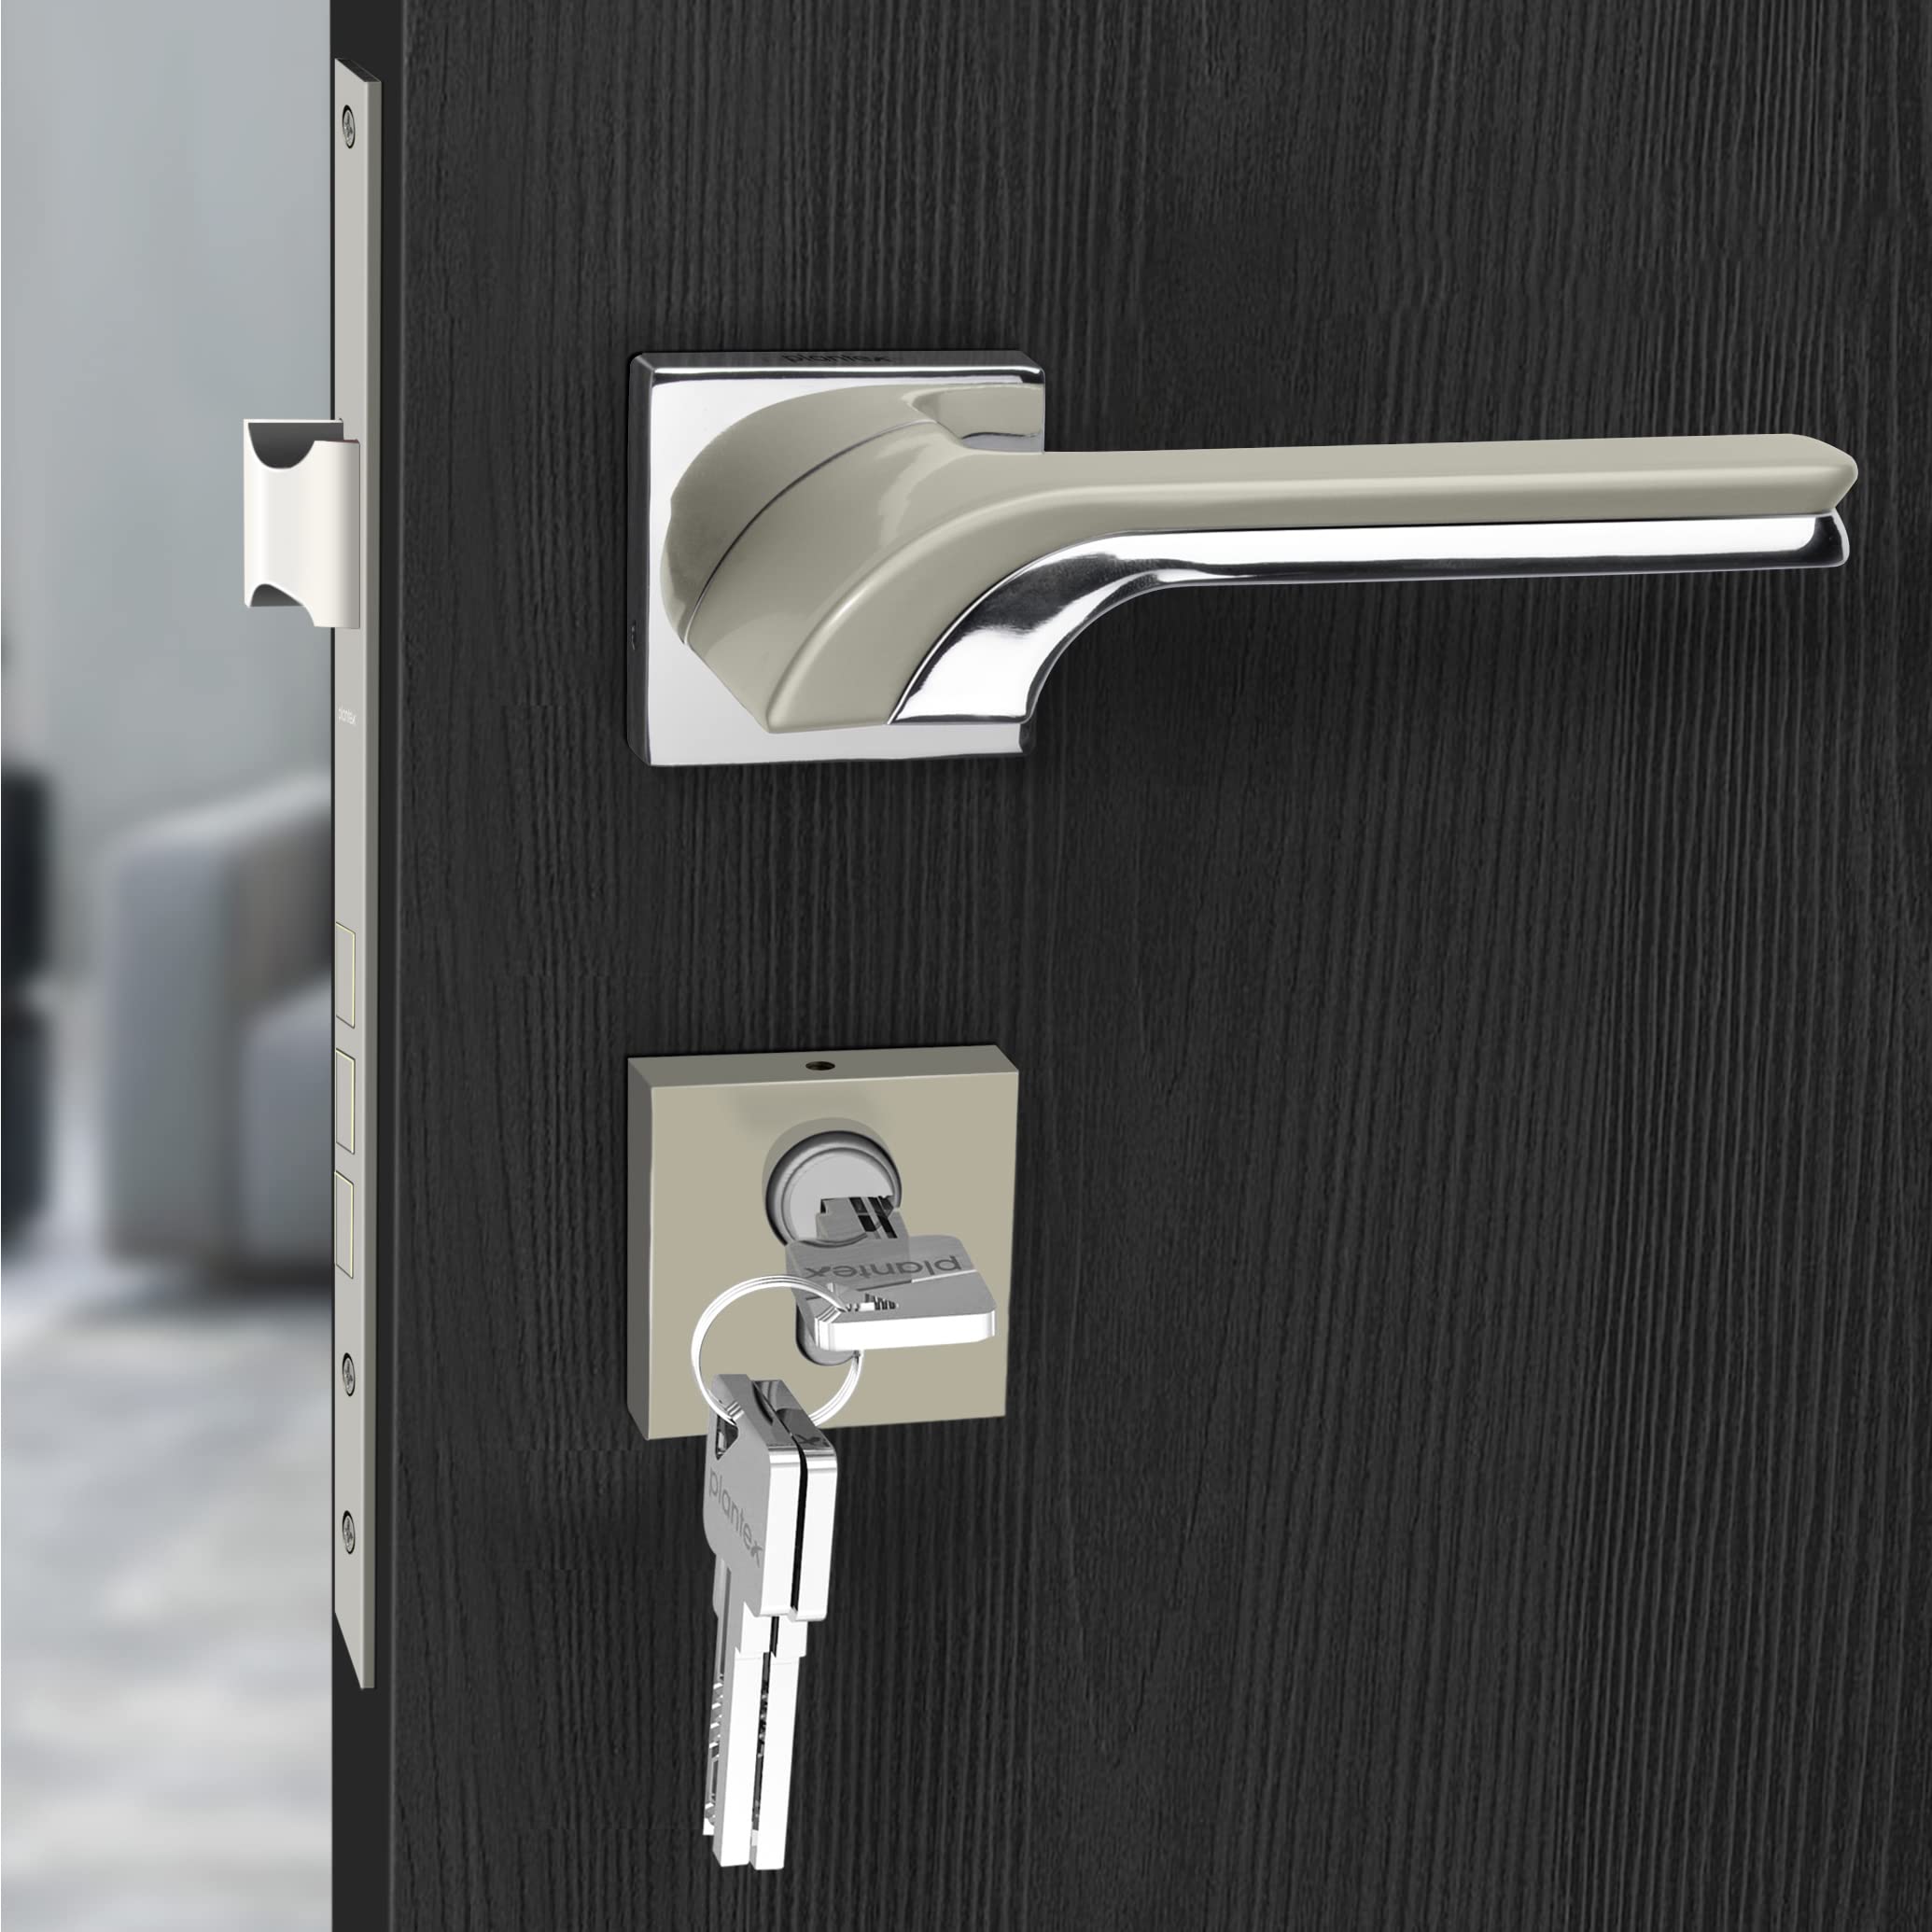 Plantex Door Lock 7094 7 Inch Handle Lock for Door 3 Keys/Mortise Lock for Home Office Hotel (Satin White & Chrome)